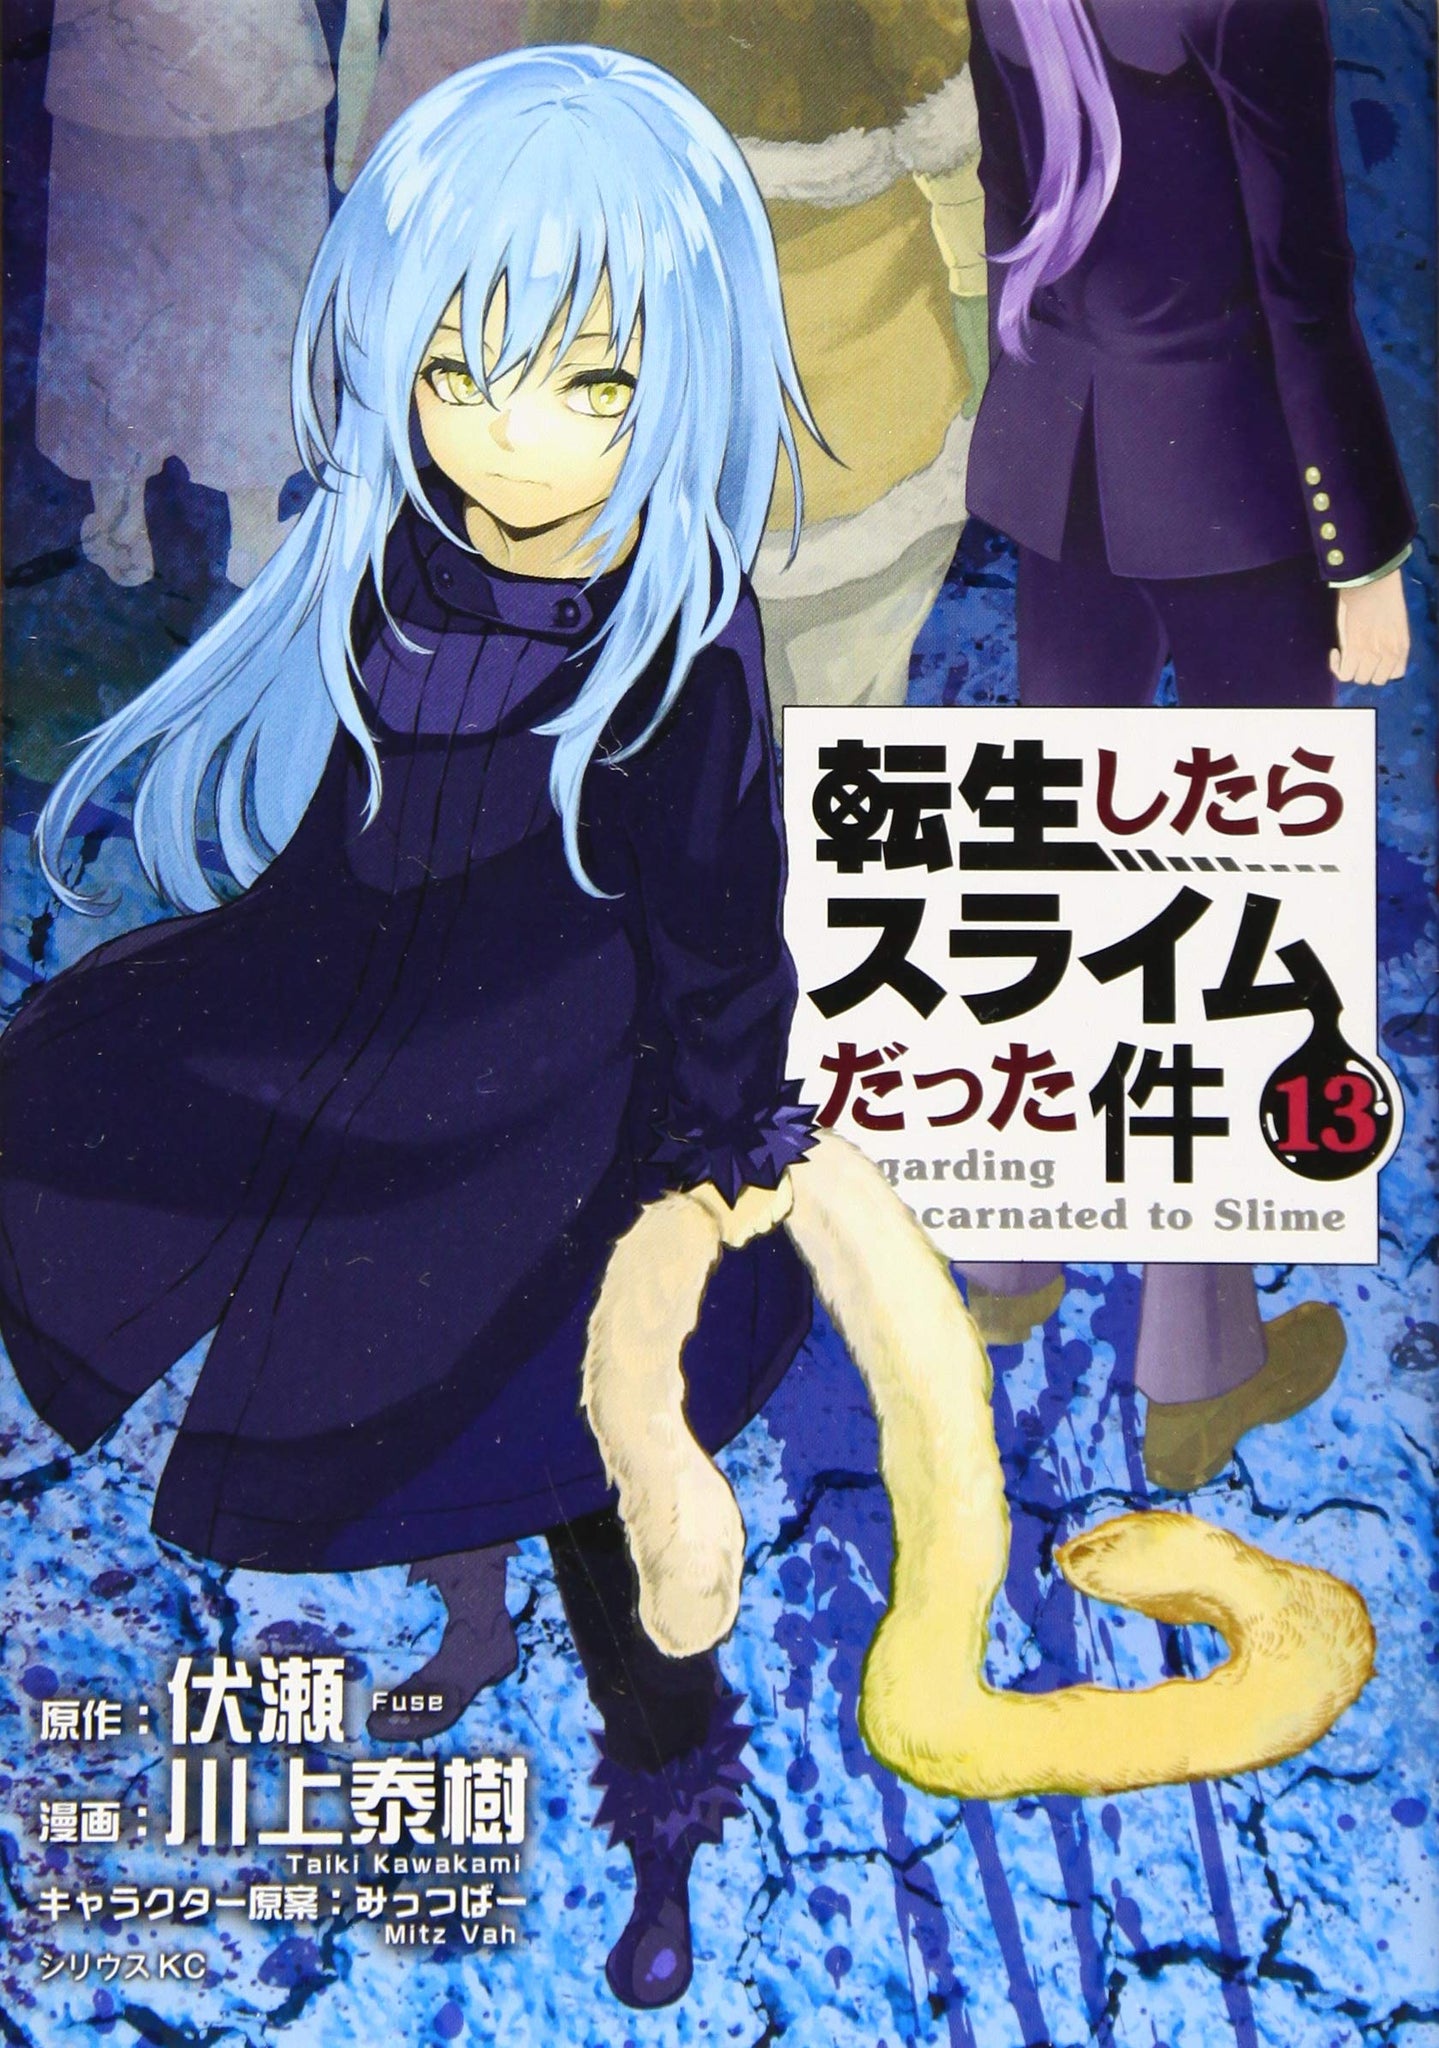 Tensei shitara Slime Datta Ken - That Time I Got Reincarnated as a Slime  Anime Art Poster